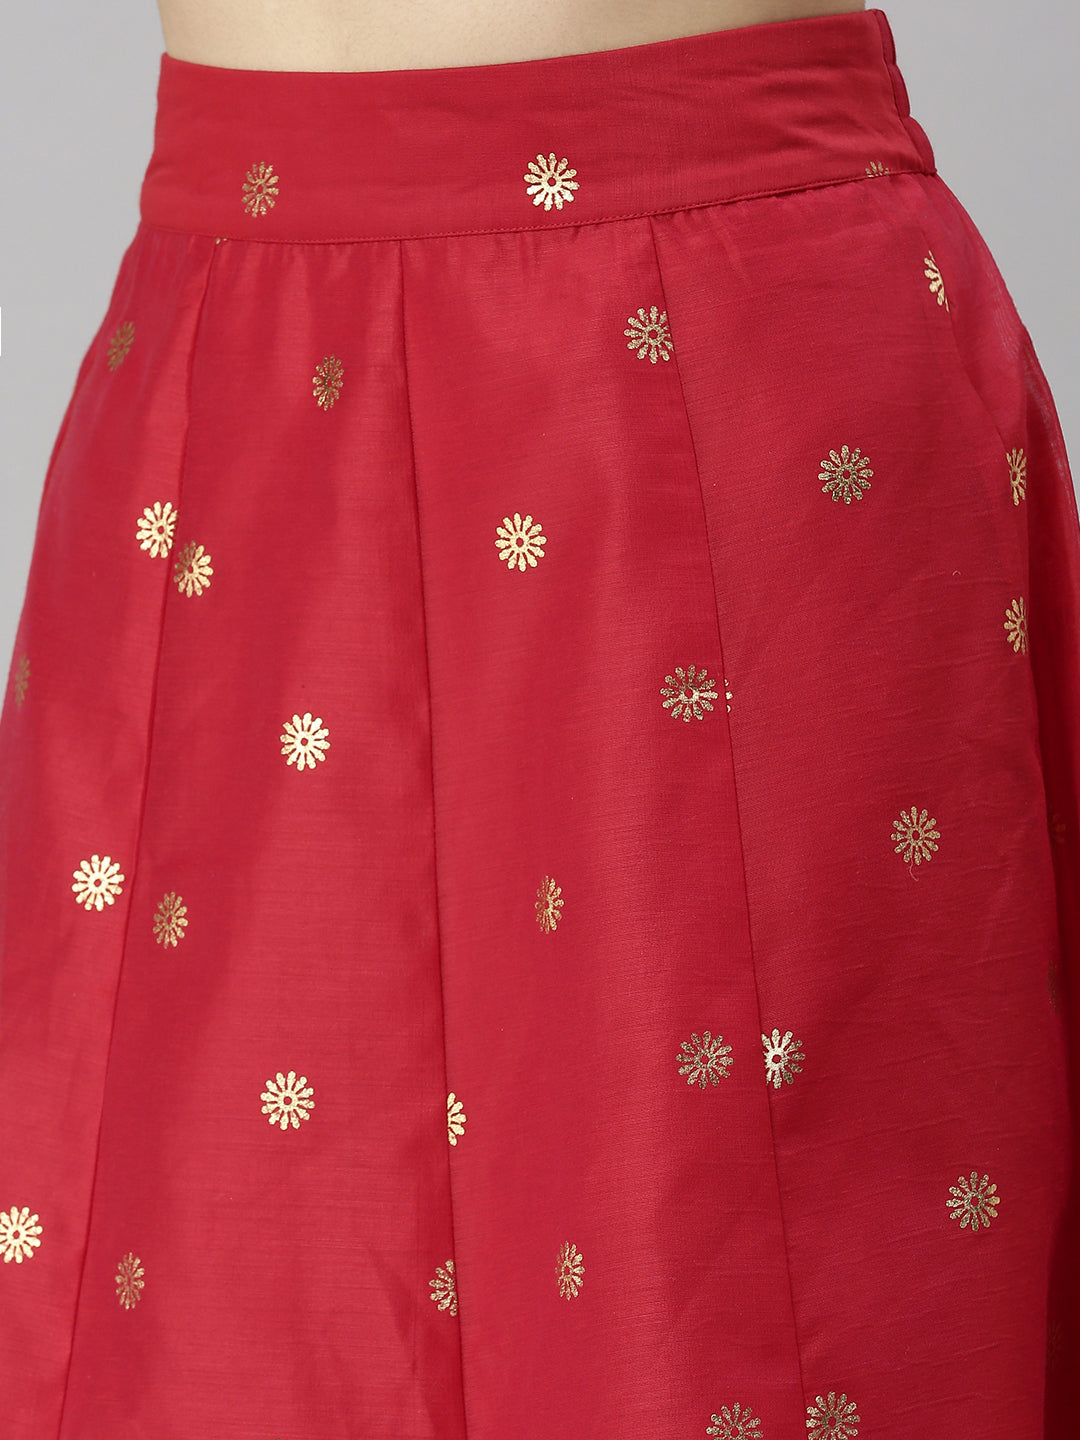 De Moza Women's Printed Skirt Red